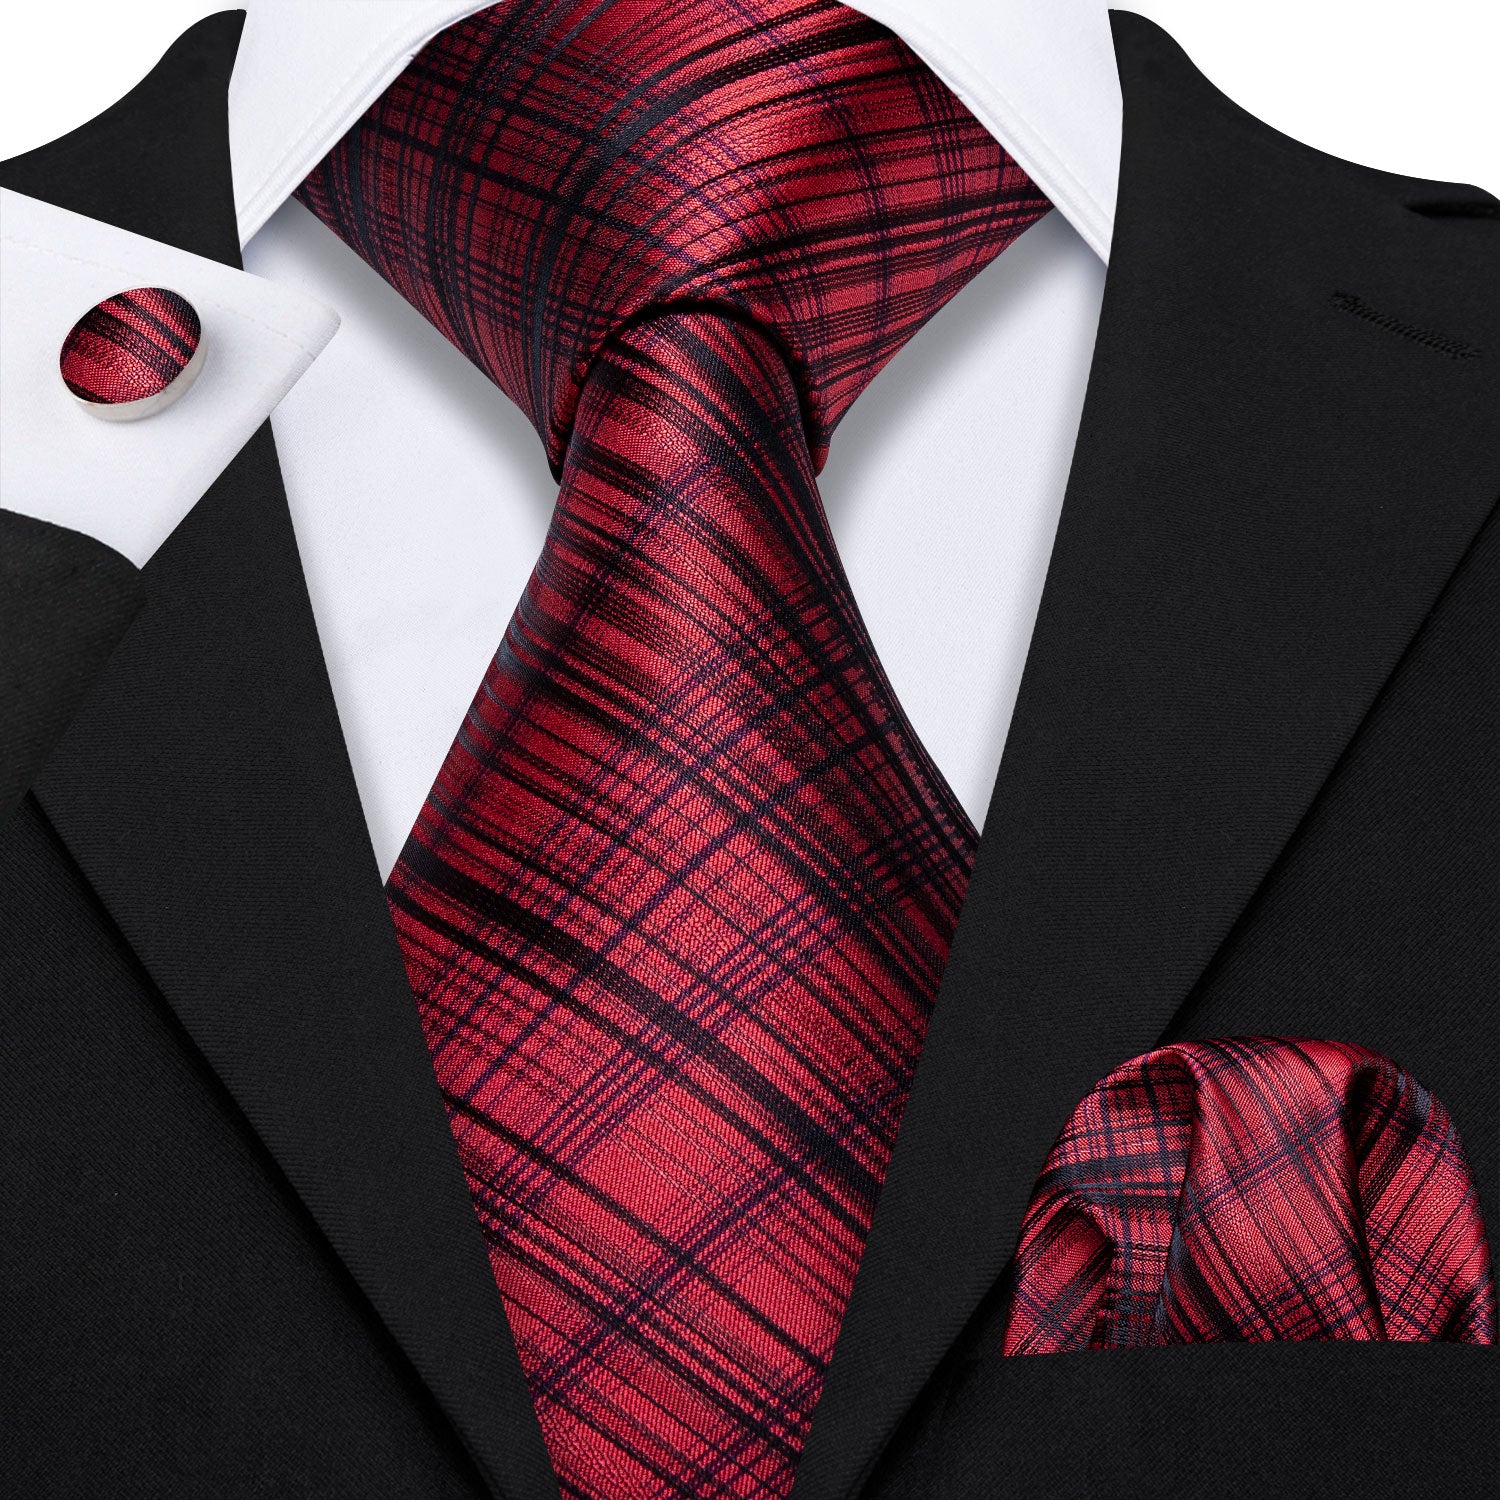 High Gloss Red and Black  Stripe Tie Pocket Square Cufflinks Set